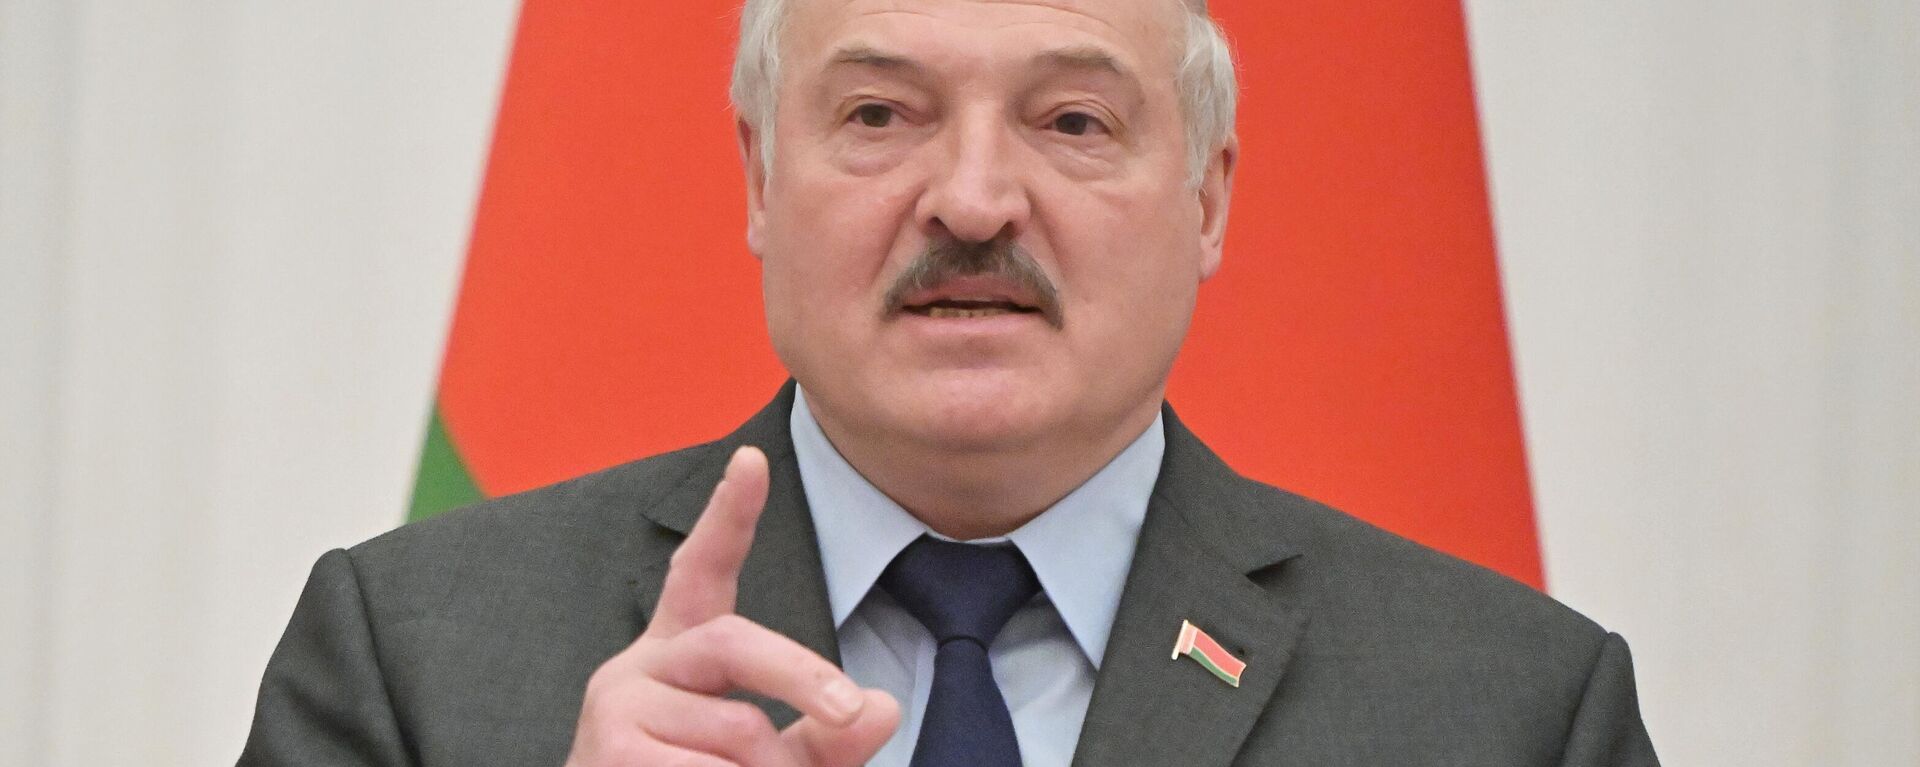 Беларусь президенти Александр Лукашенко - Sputnik Кыргызстан, 1920, 24.02.2022